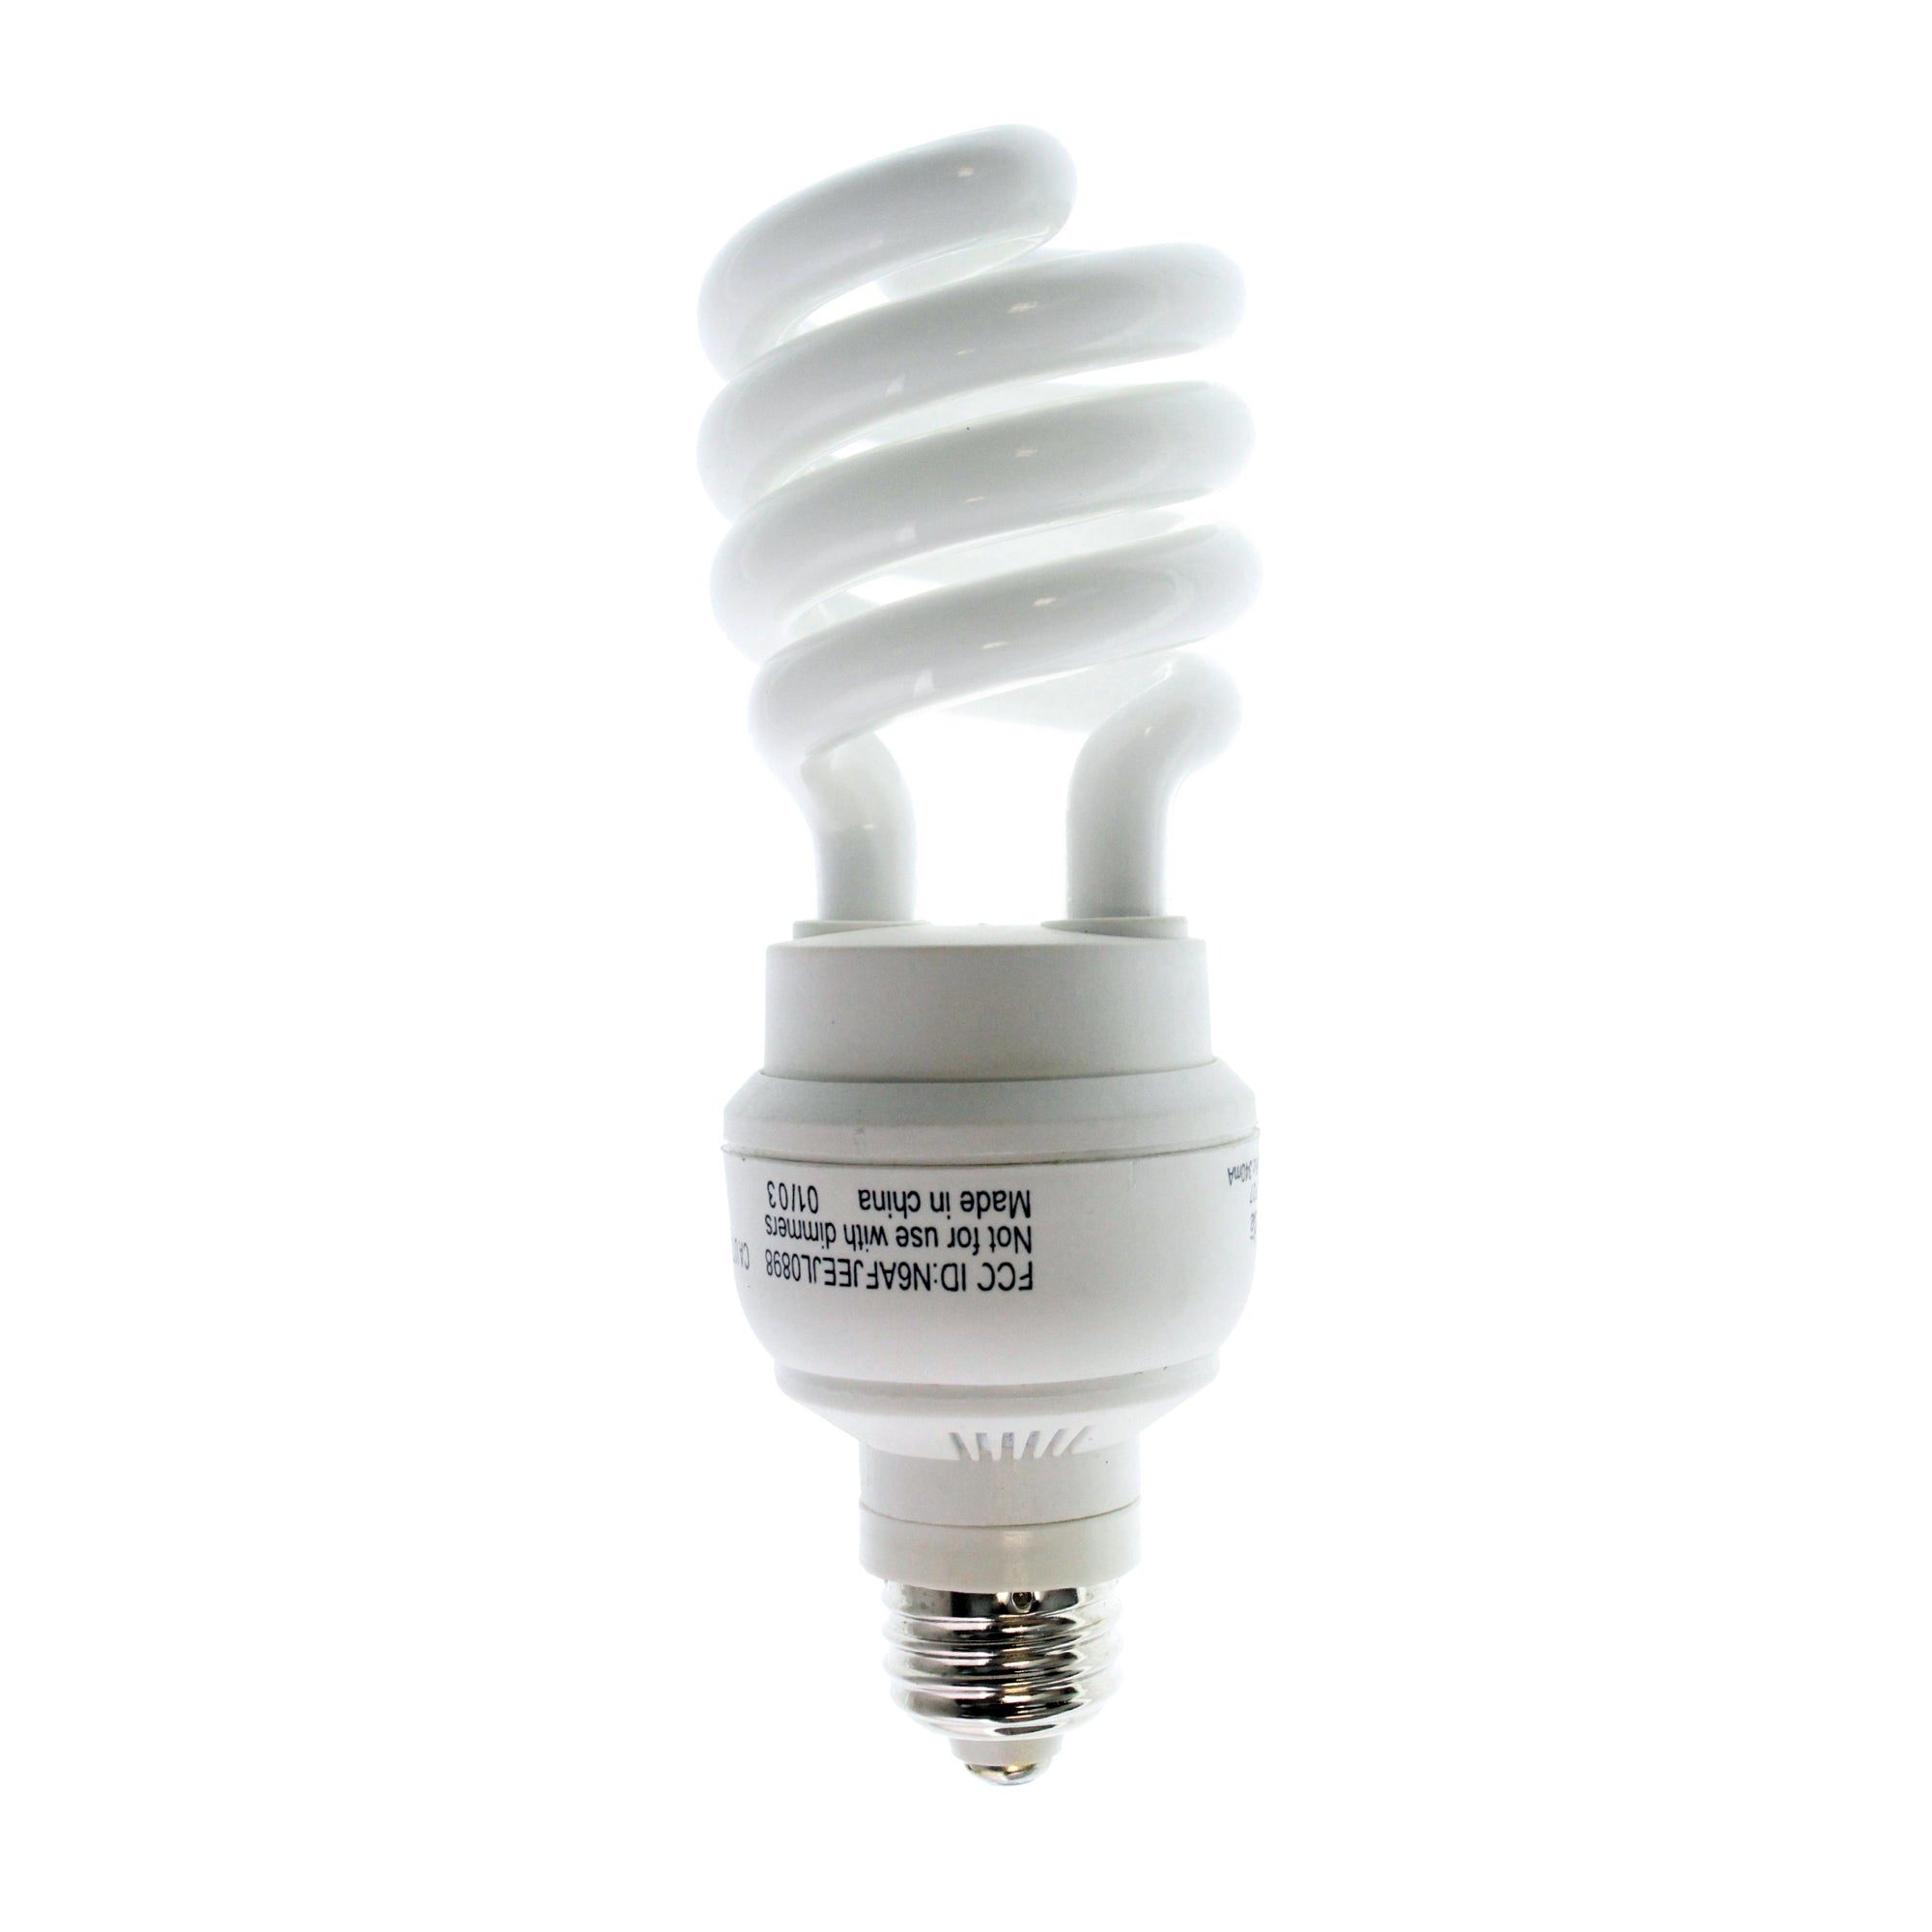 A.L.P. Lighting Components, ALP LIGHTING AET2P27 COMPACT FLOURESCENT CFL LAMP, E26 MED BASE, 3K, 27-WATT